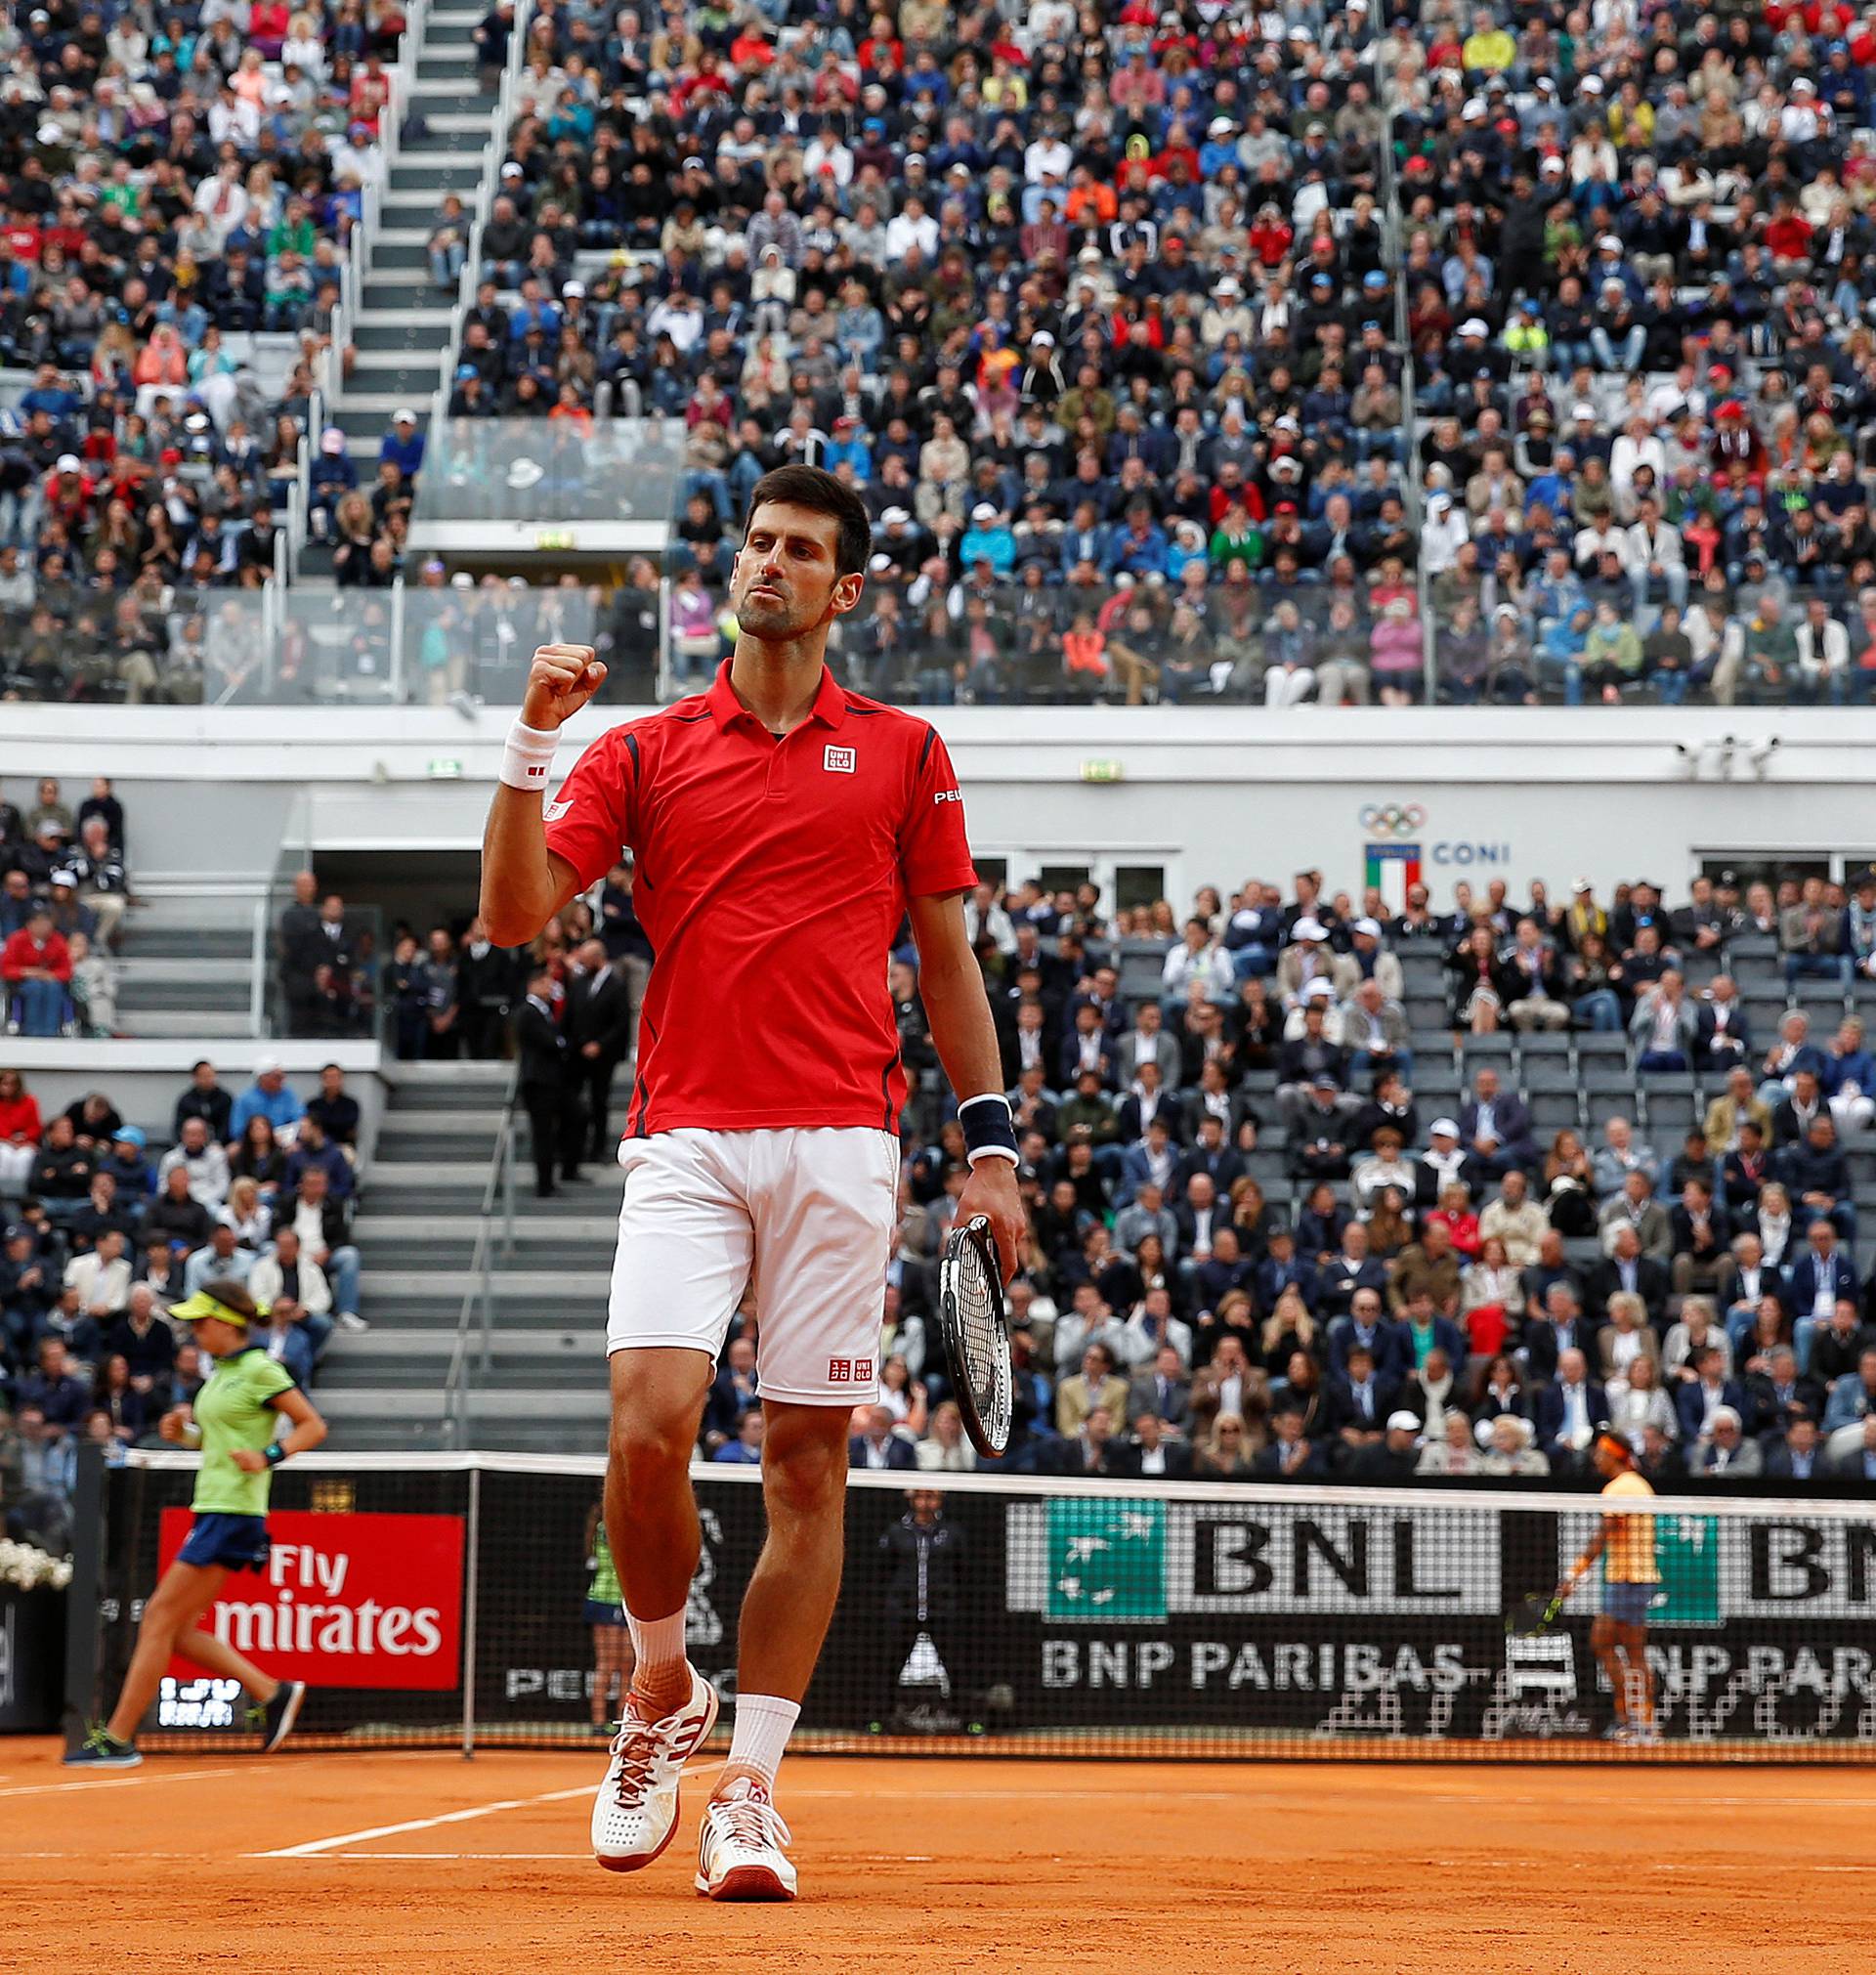 Tennis - Italy Open Men's Singles Quarterfinal match - Novak Djokovic of Serbia v Rafael Nadal of Spain - Rome, Italy 